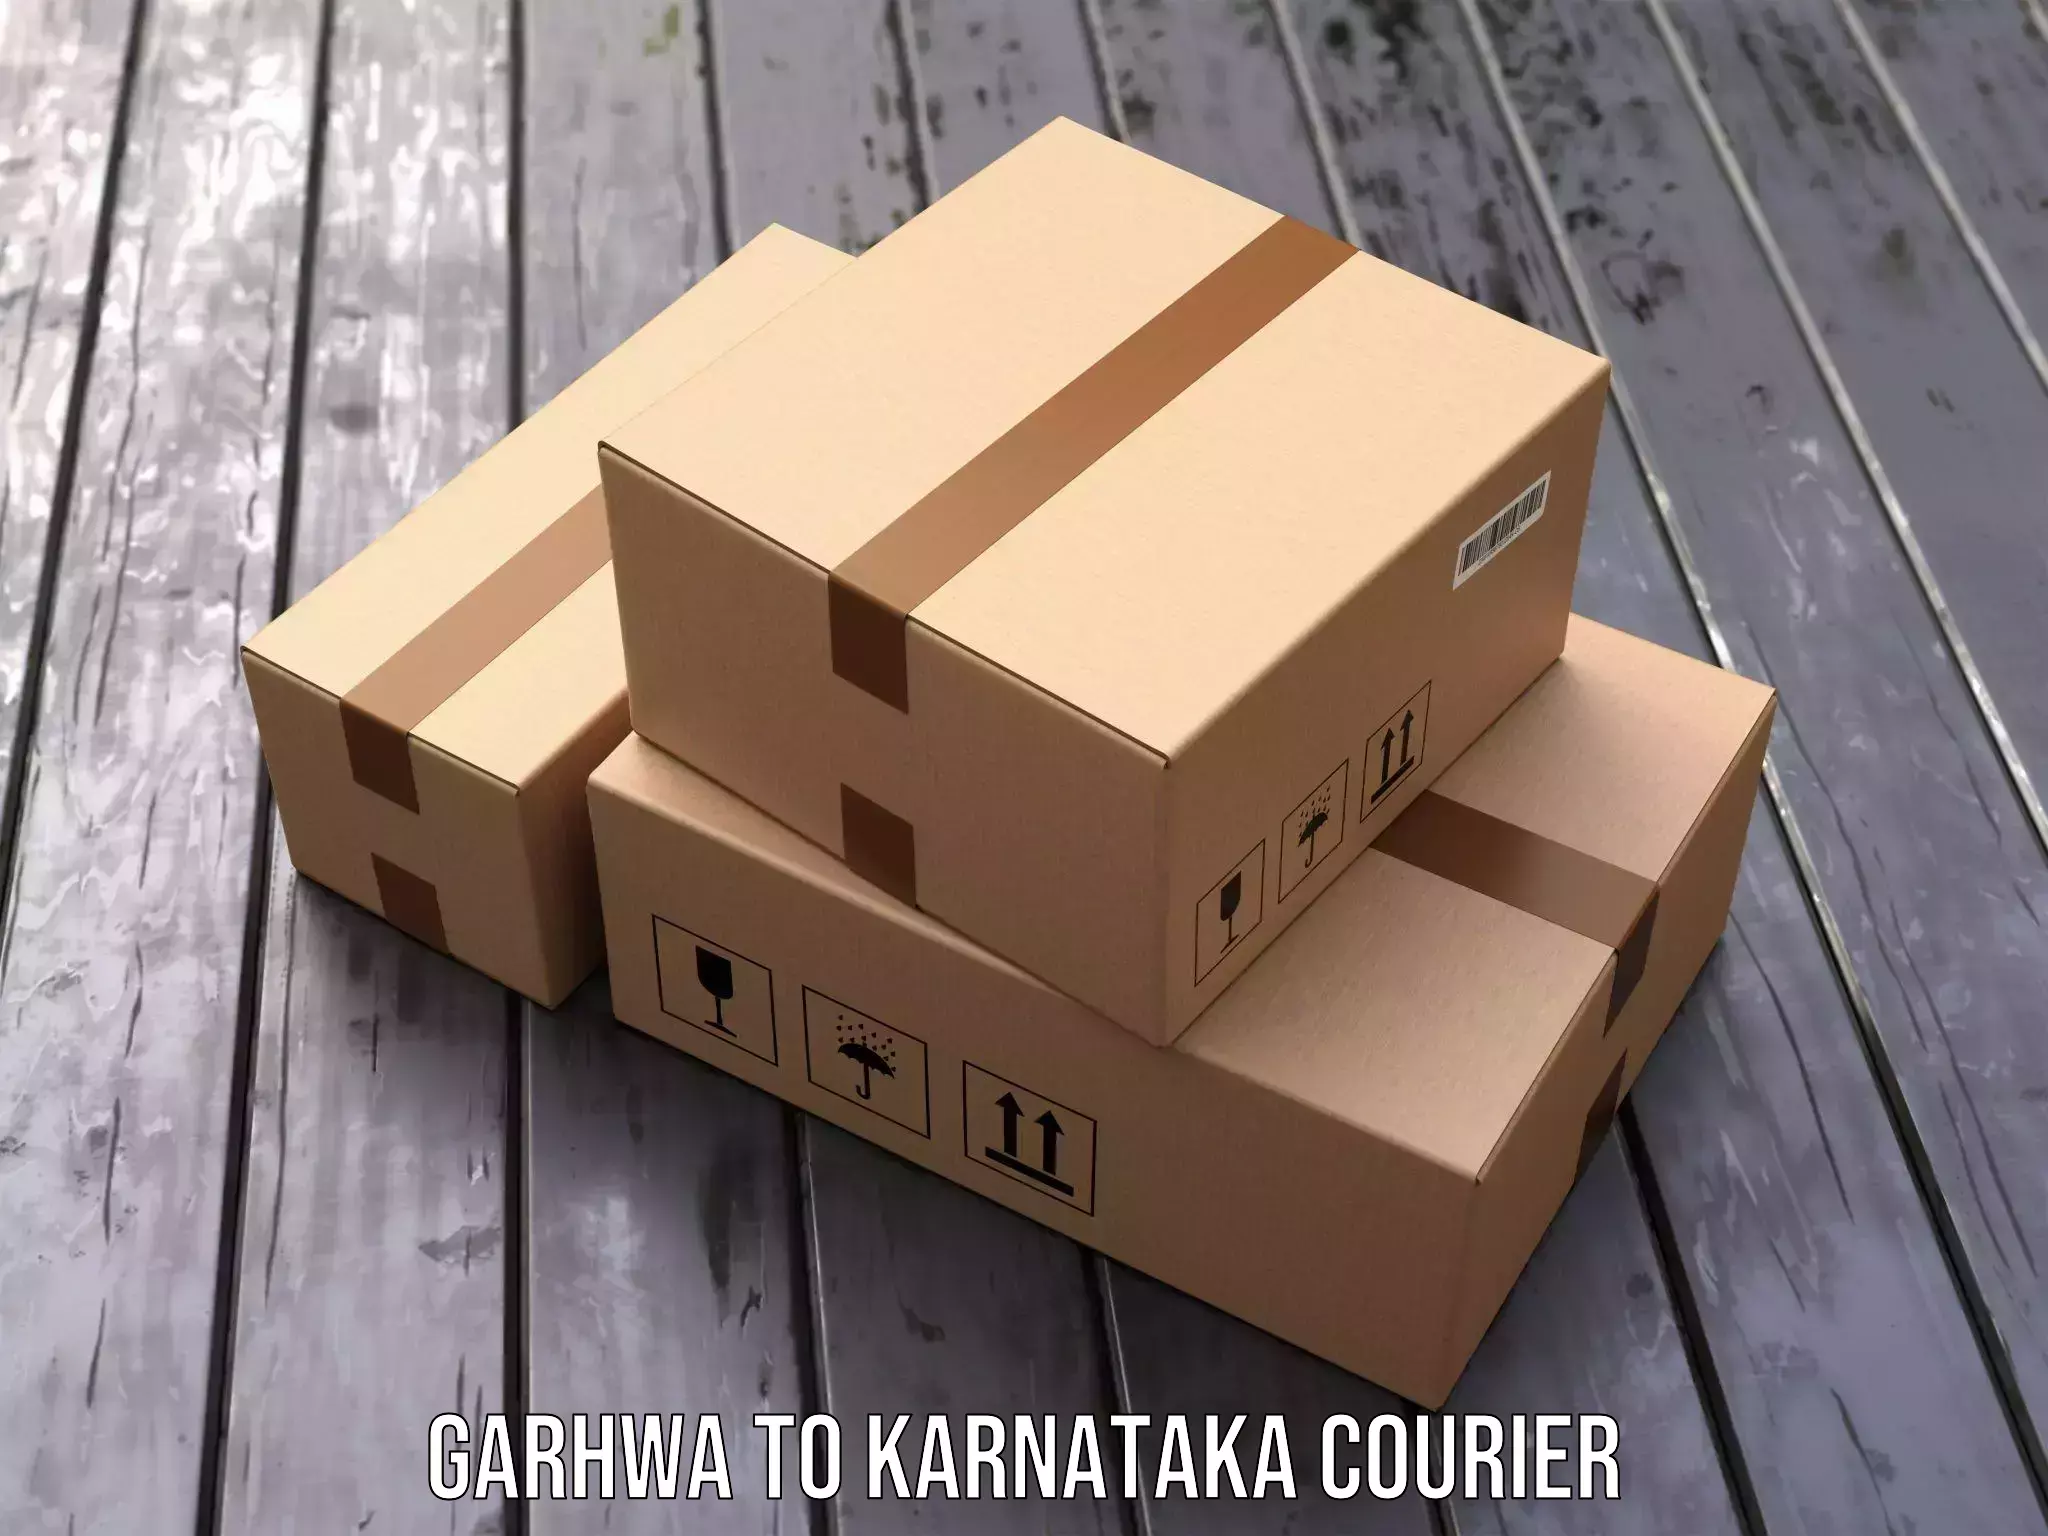 24/7 courier service in Garhwa to Honnali